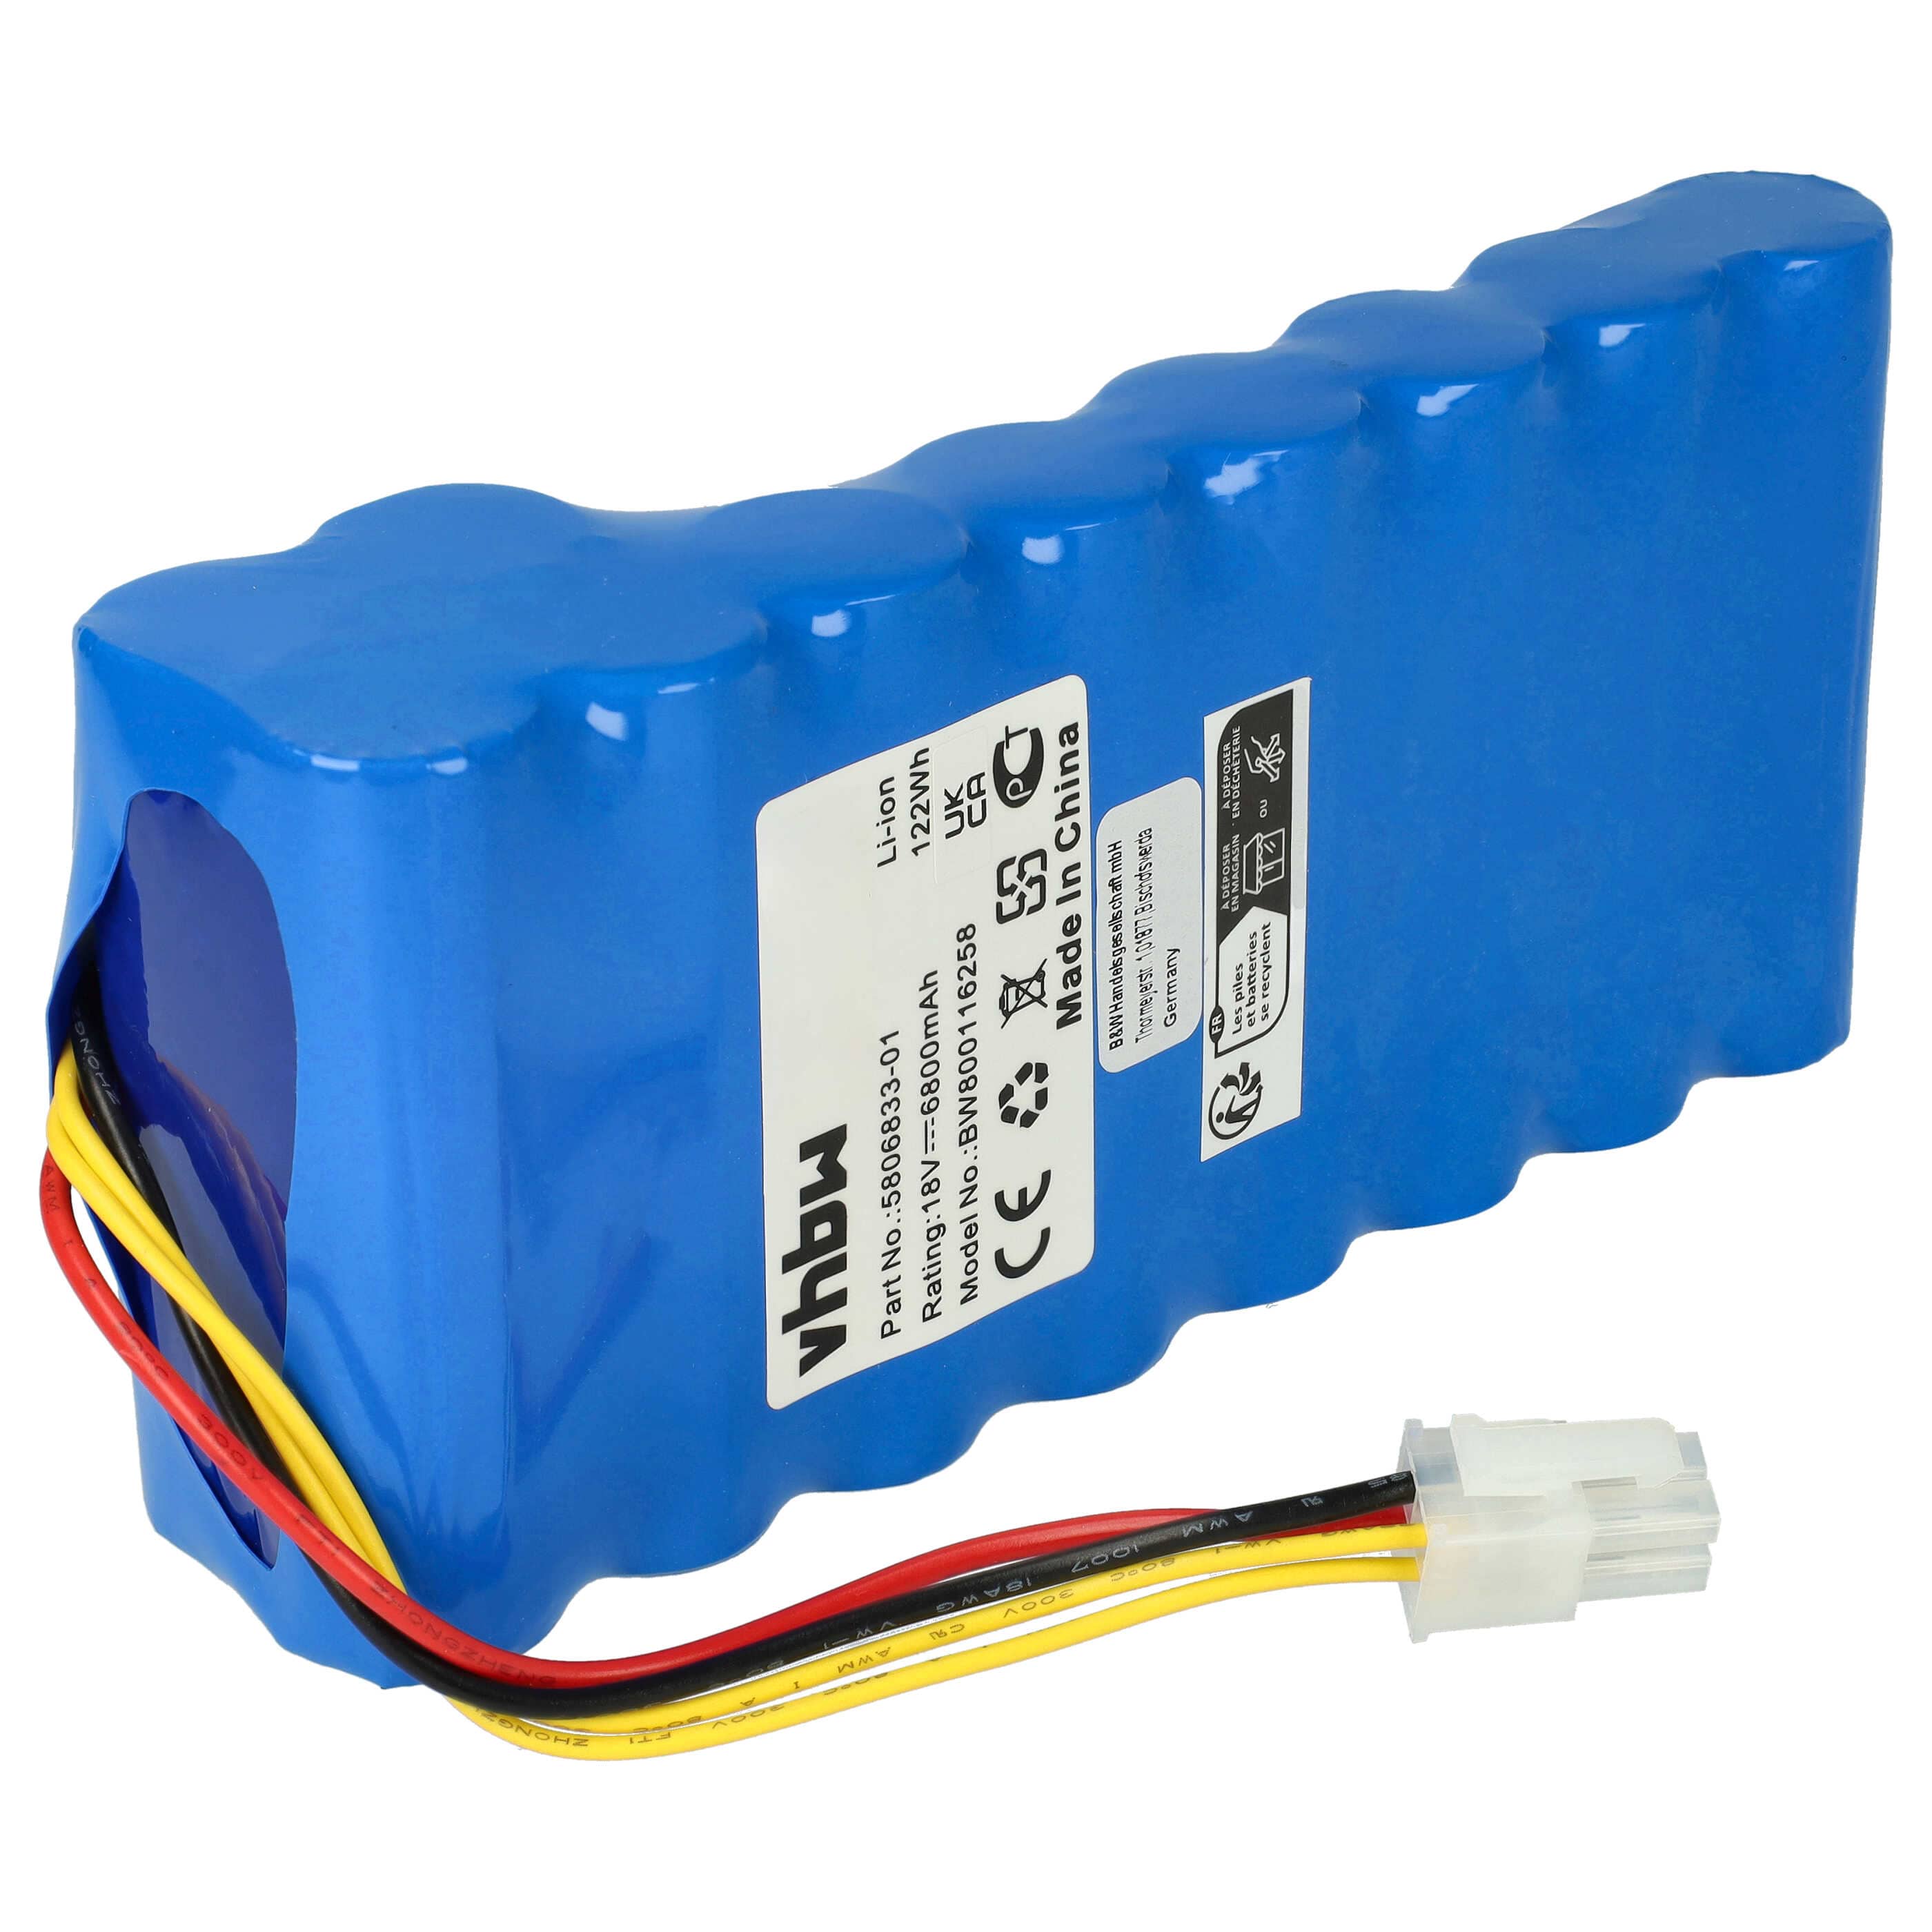 Lawnmower Battery Pack Replacement for Husqvarna 580 68 33-01, 580683301, 5806833-01 - 6800mAh 18V Li-Ion